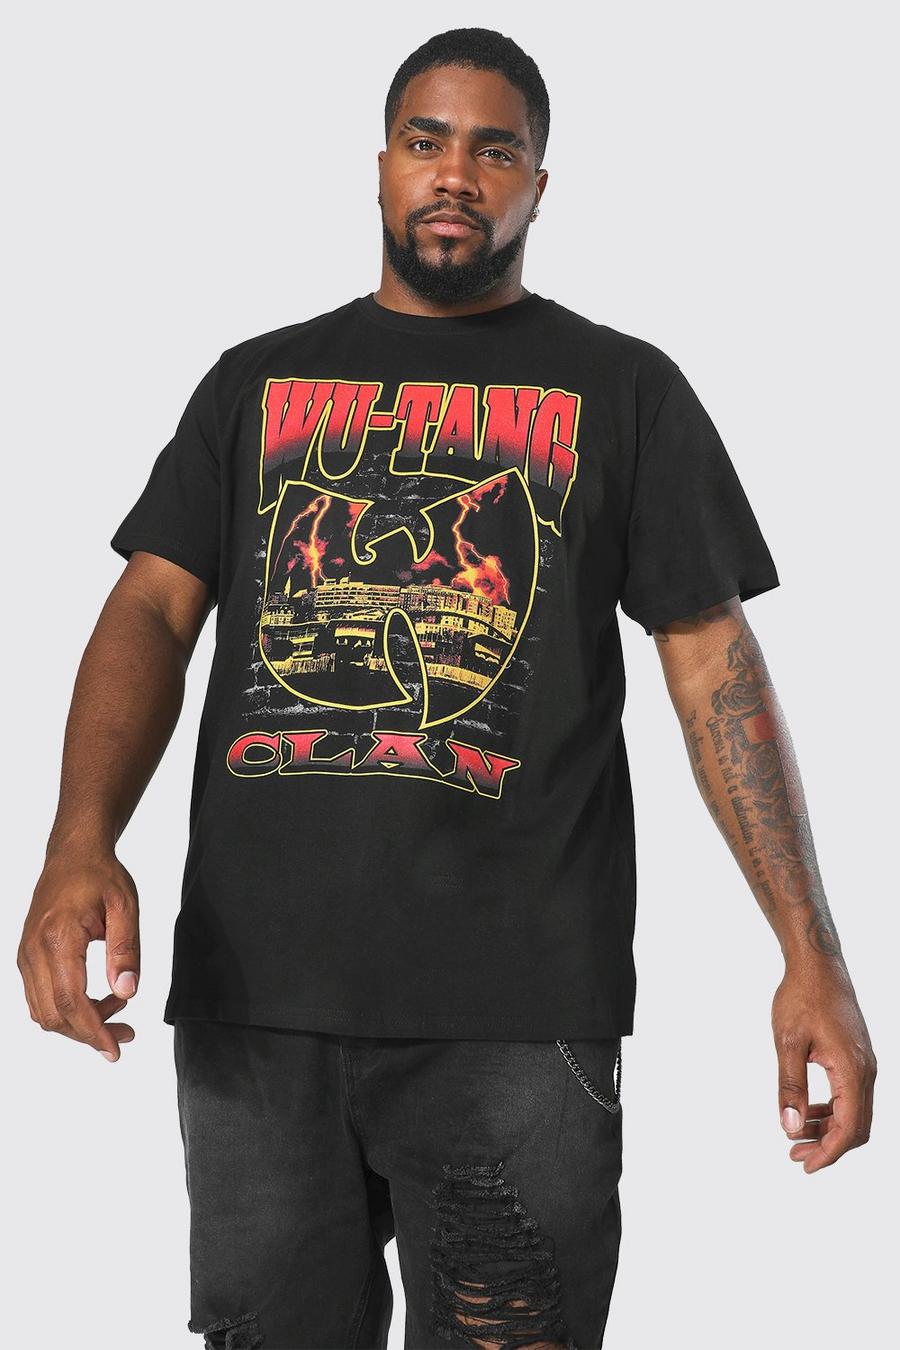 T-shirt Plus Size ufficiale Wu Tang con fulmini, Black nero